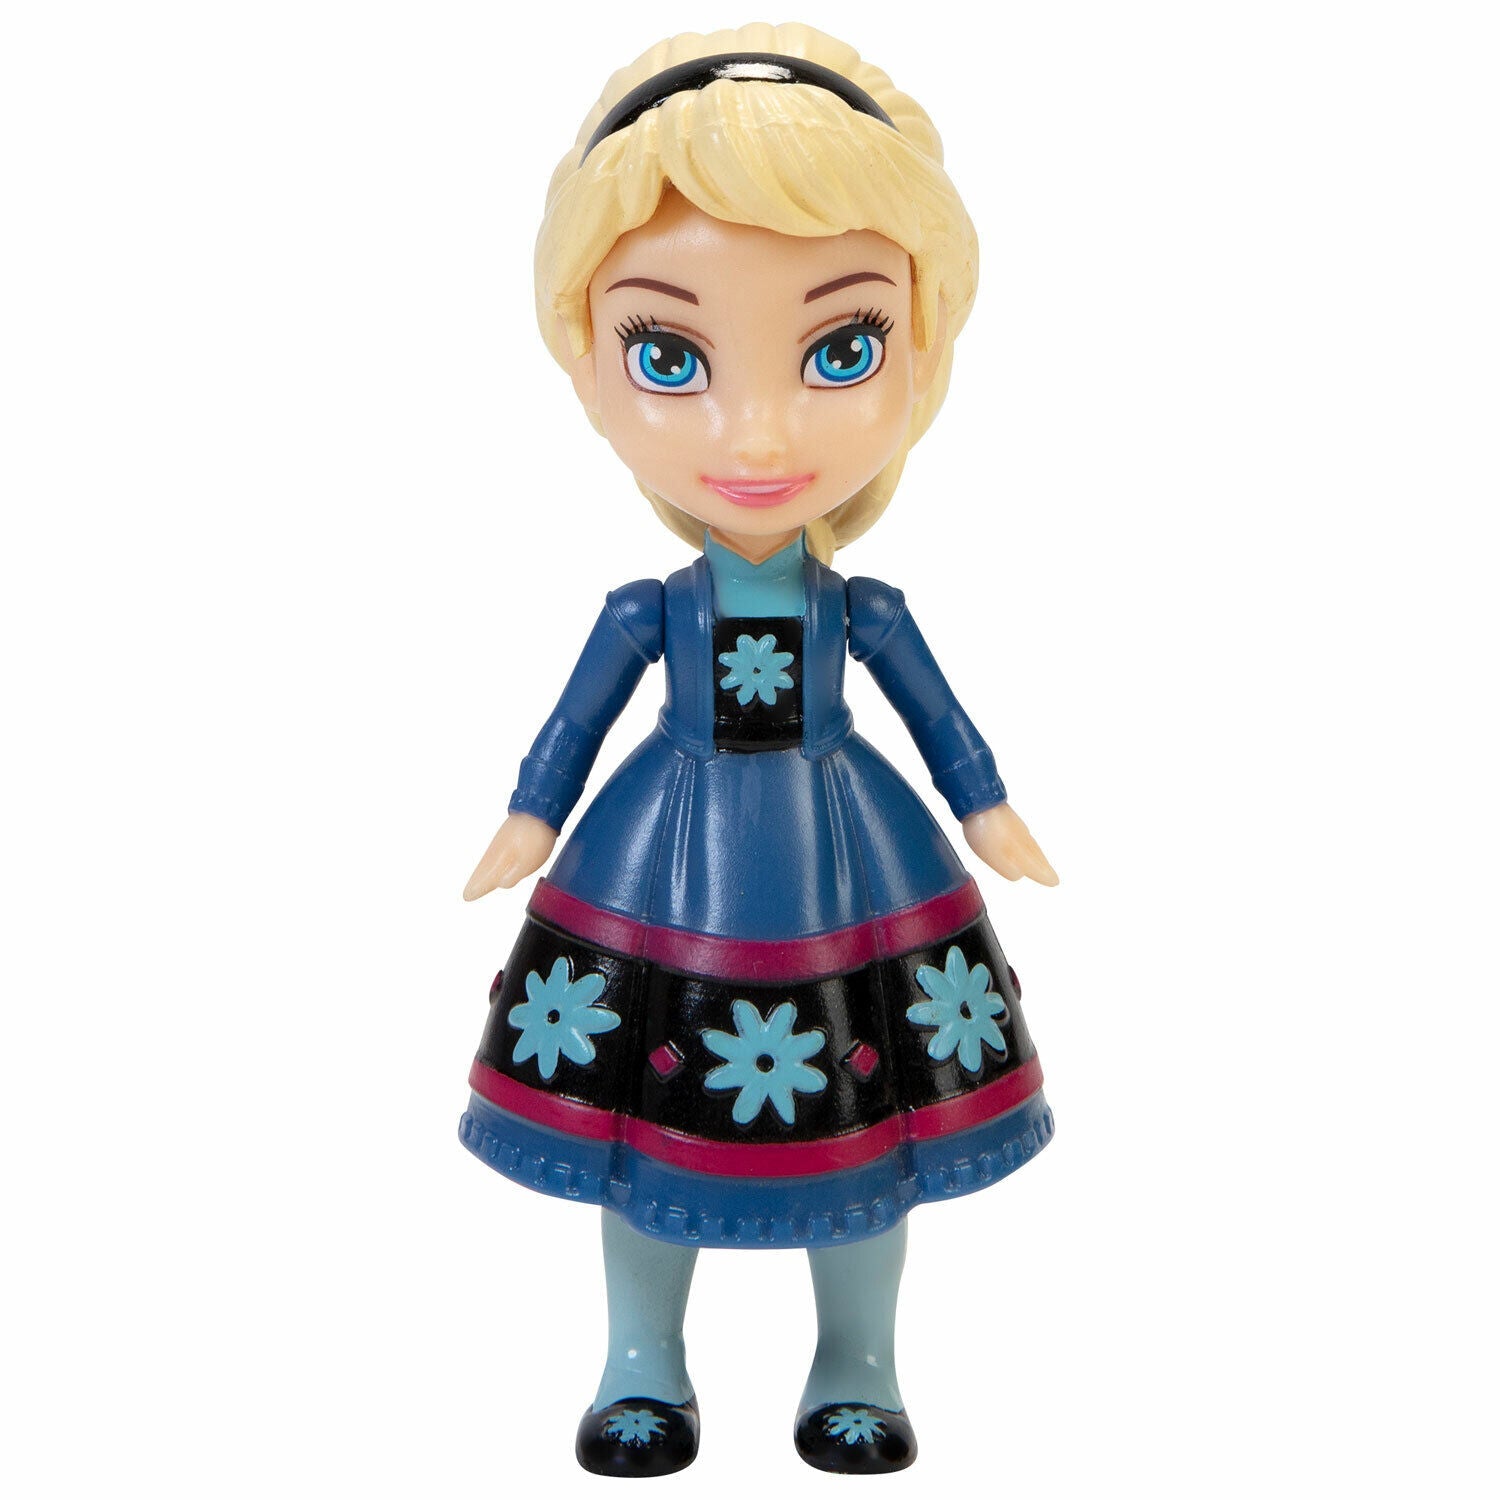 Disney Mini 3-Inch Toddler Dolls - Pick Your Favorite! - Young Elsa (Frozen 2)